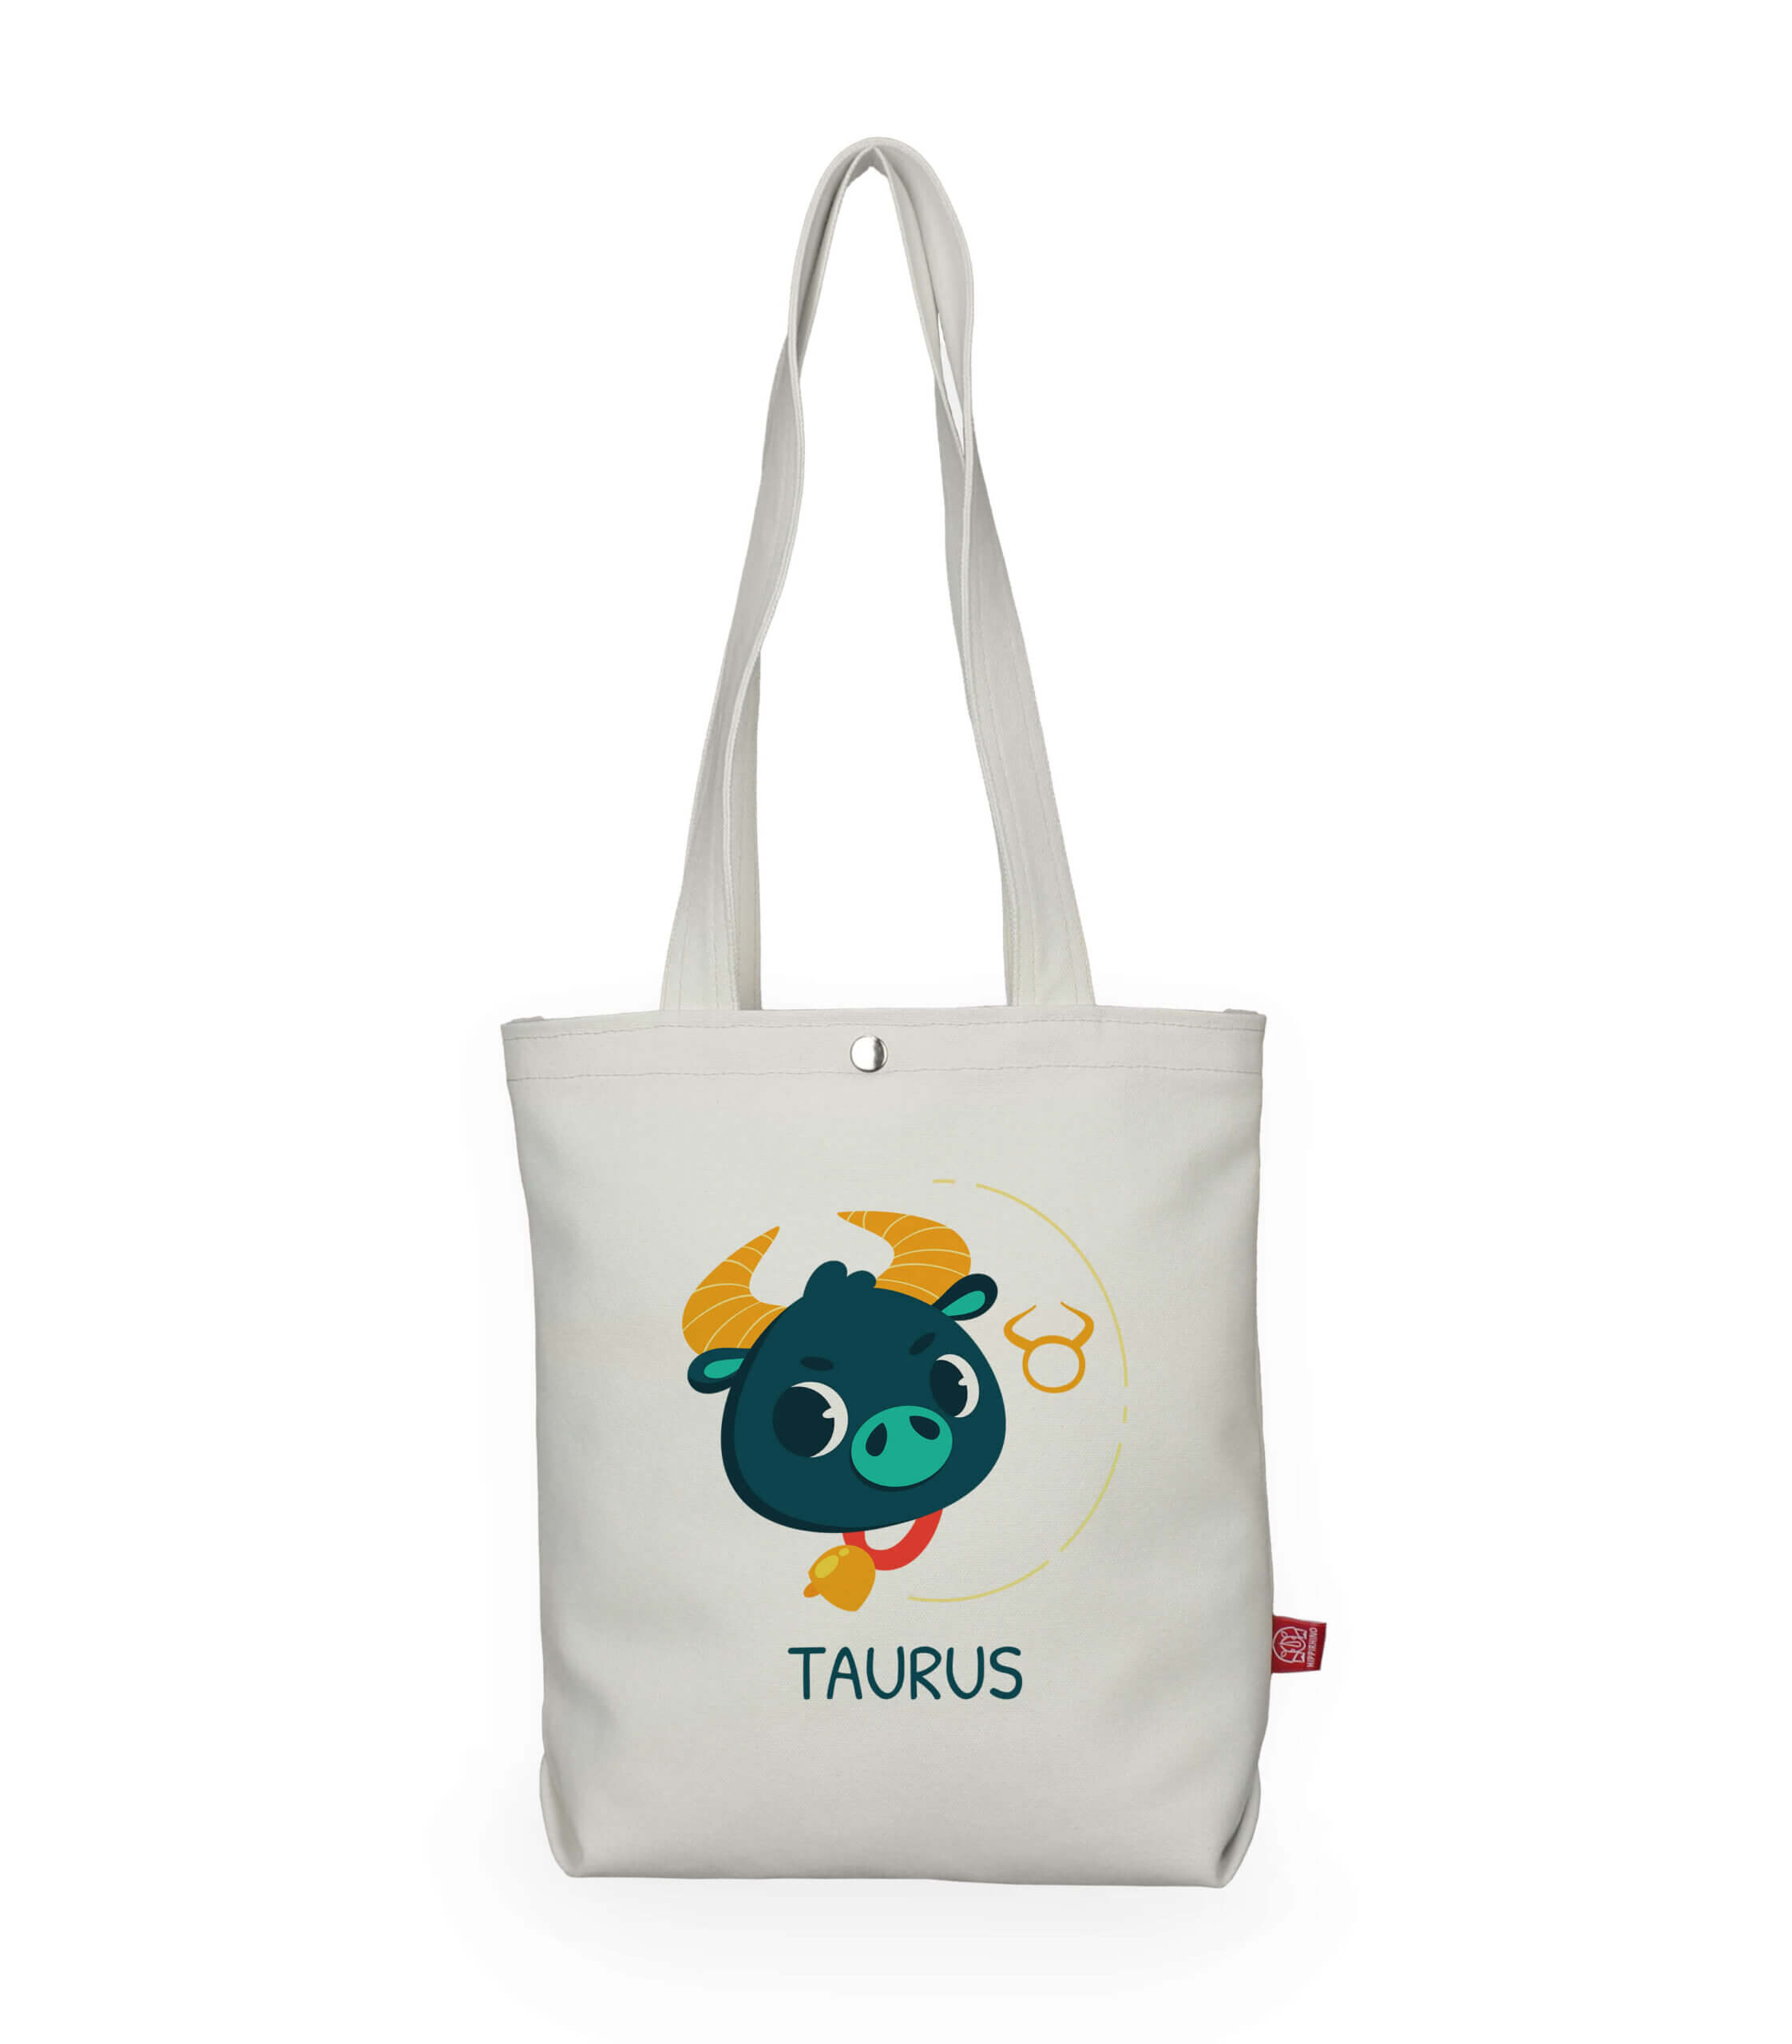 Taurus Astrology Zodiac Sign Cotton Canvas Tote Bag